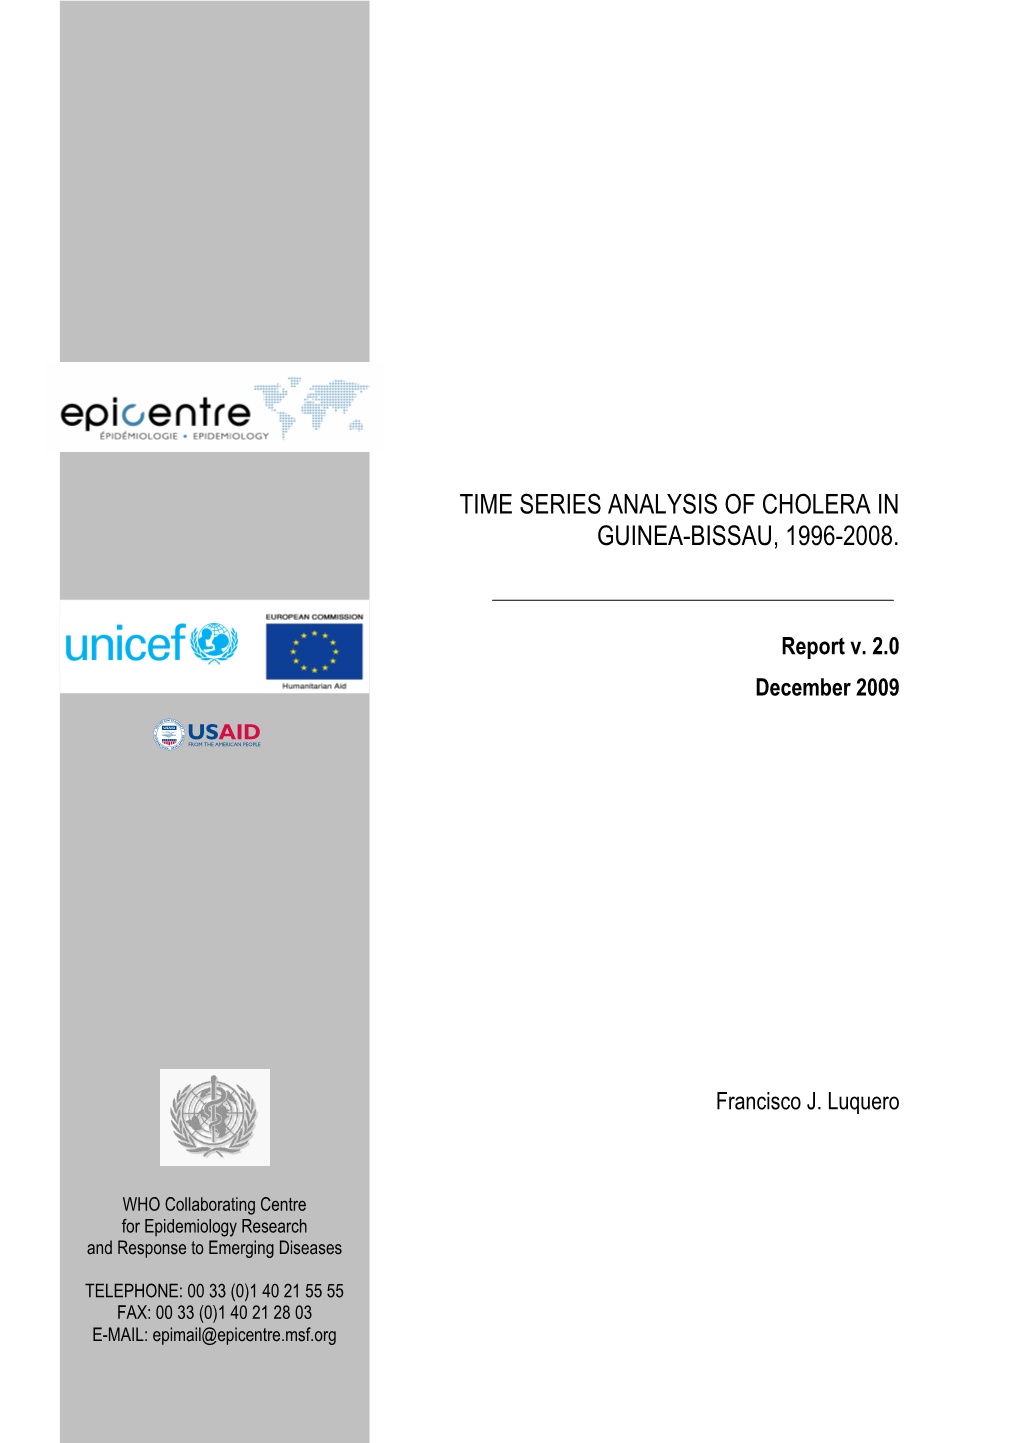 Time Series Analysis of Cholera in Guinea-Bissau, 1996-2008